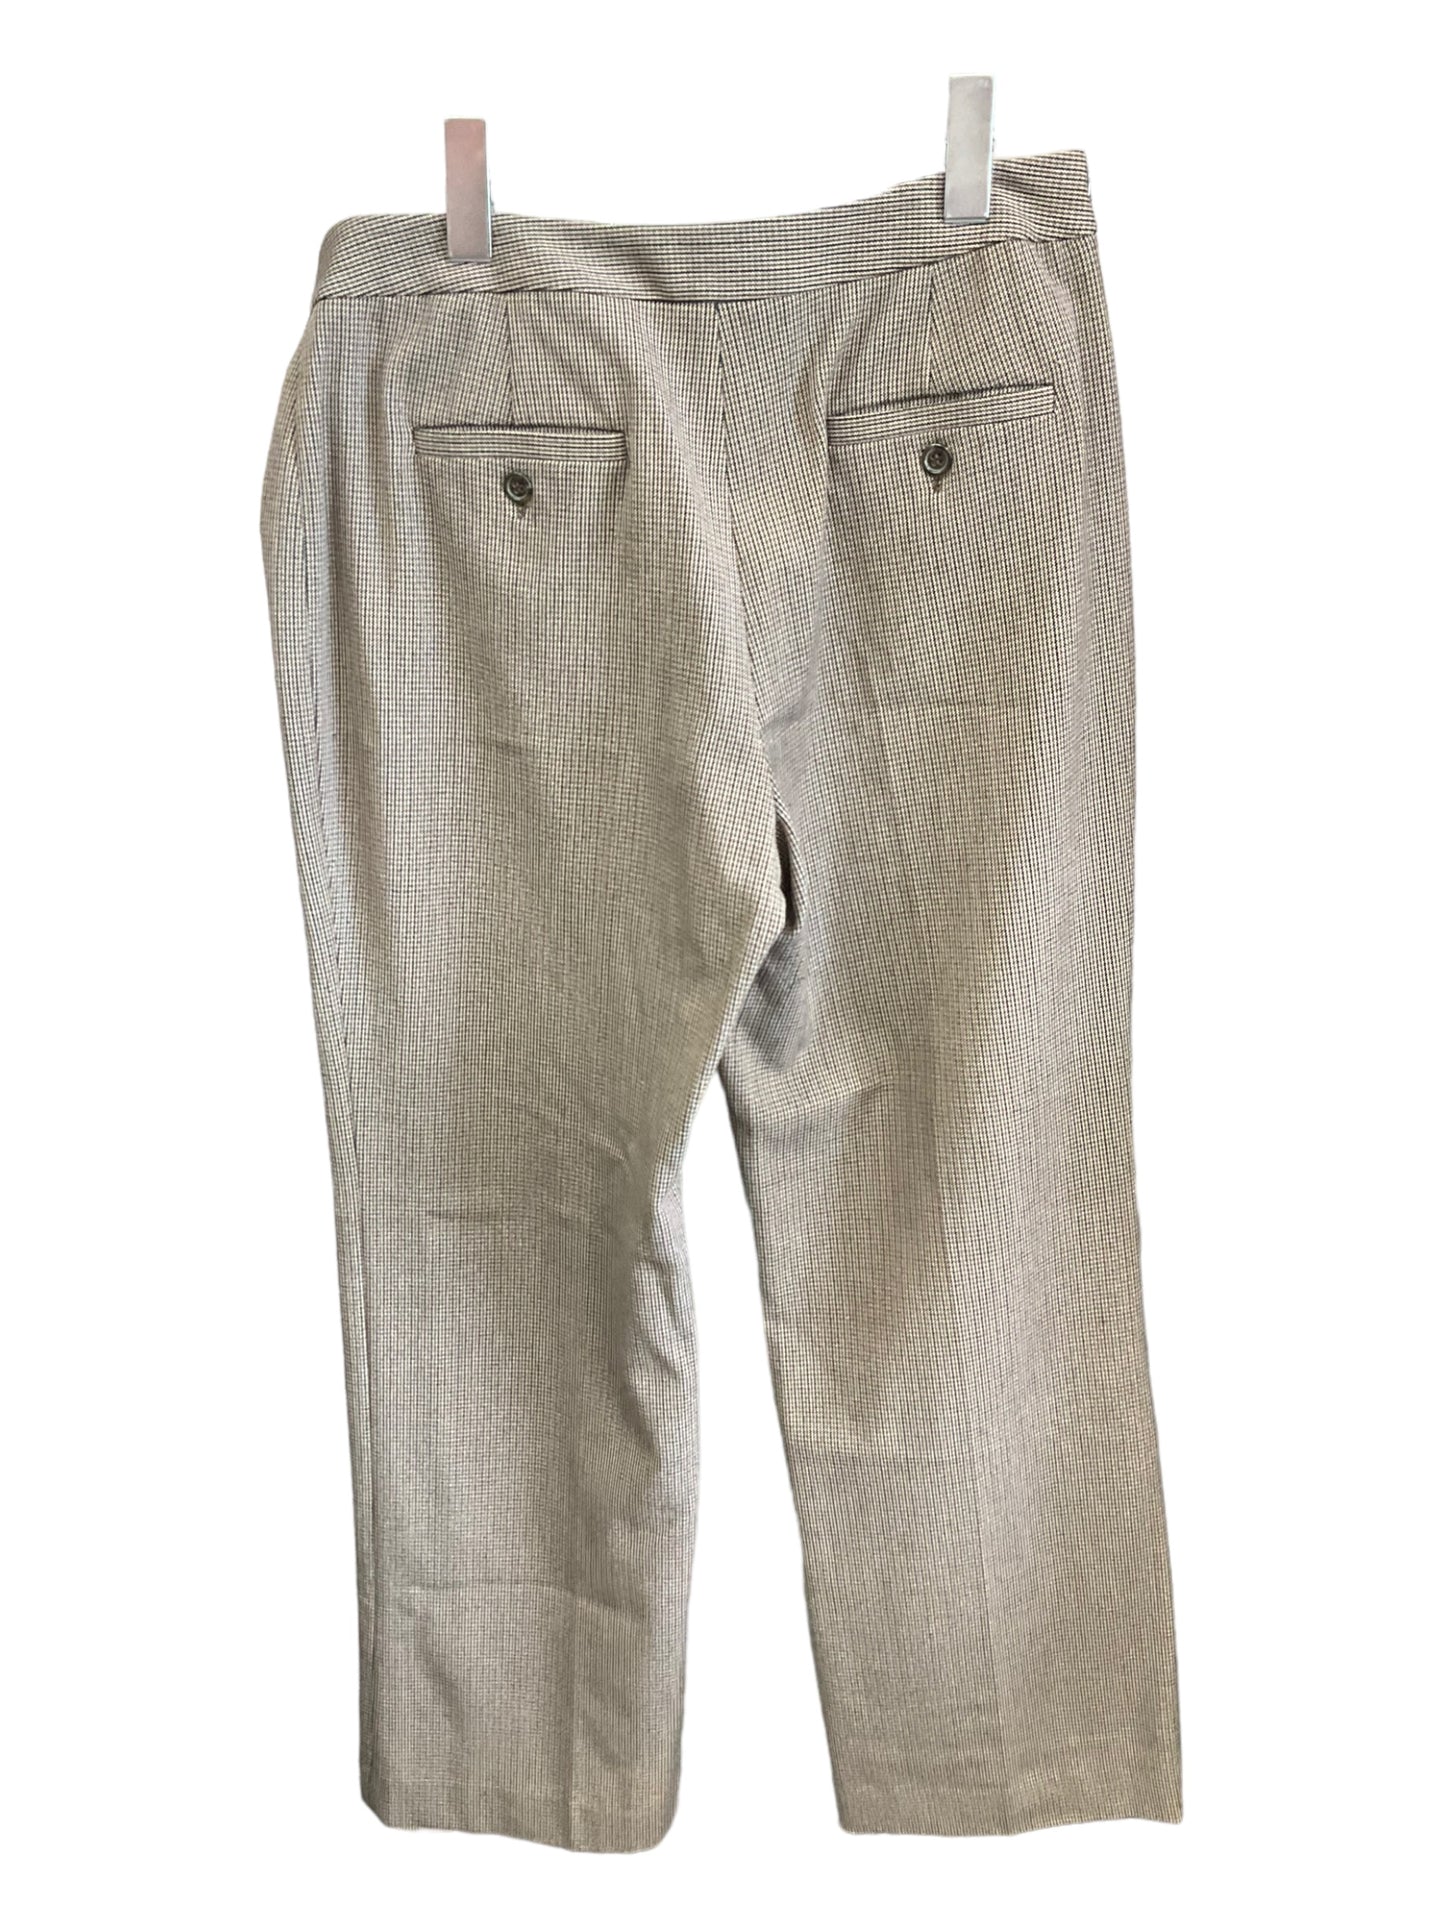 Pants Work/dress By Charter Club  Size: Petite  Medium